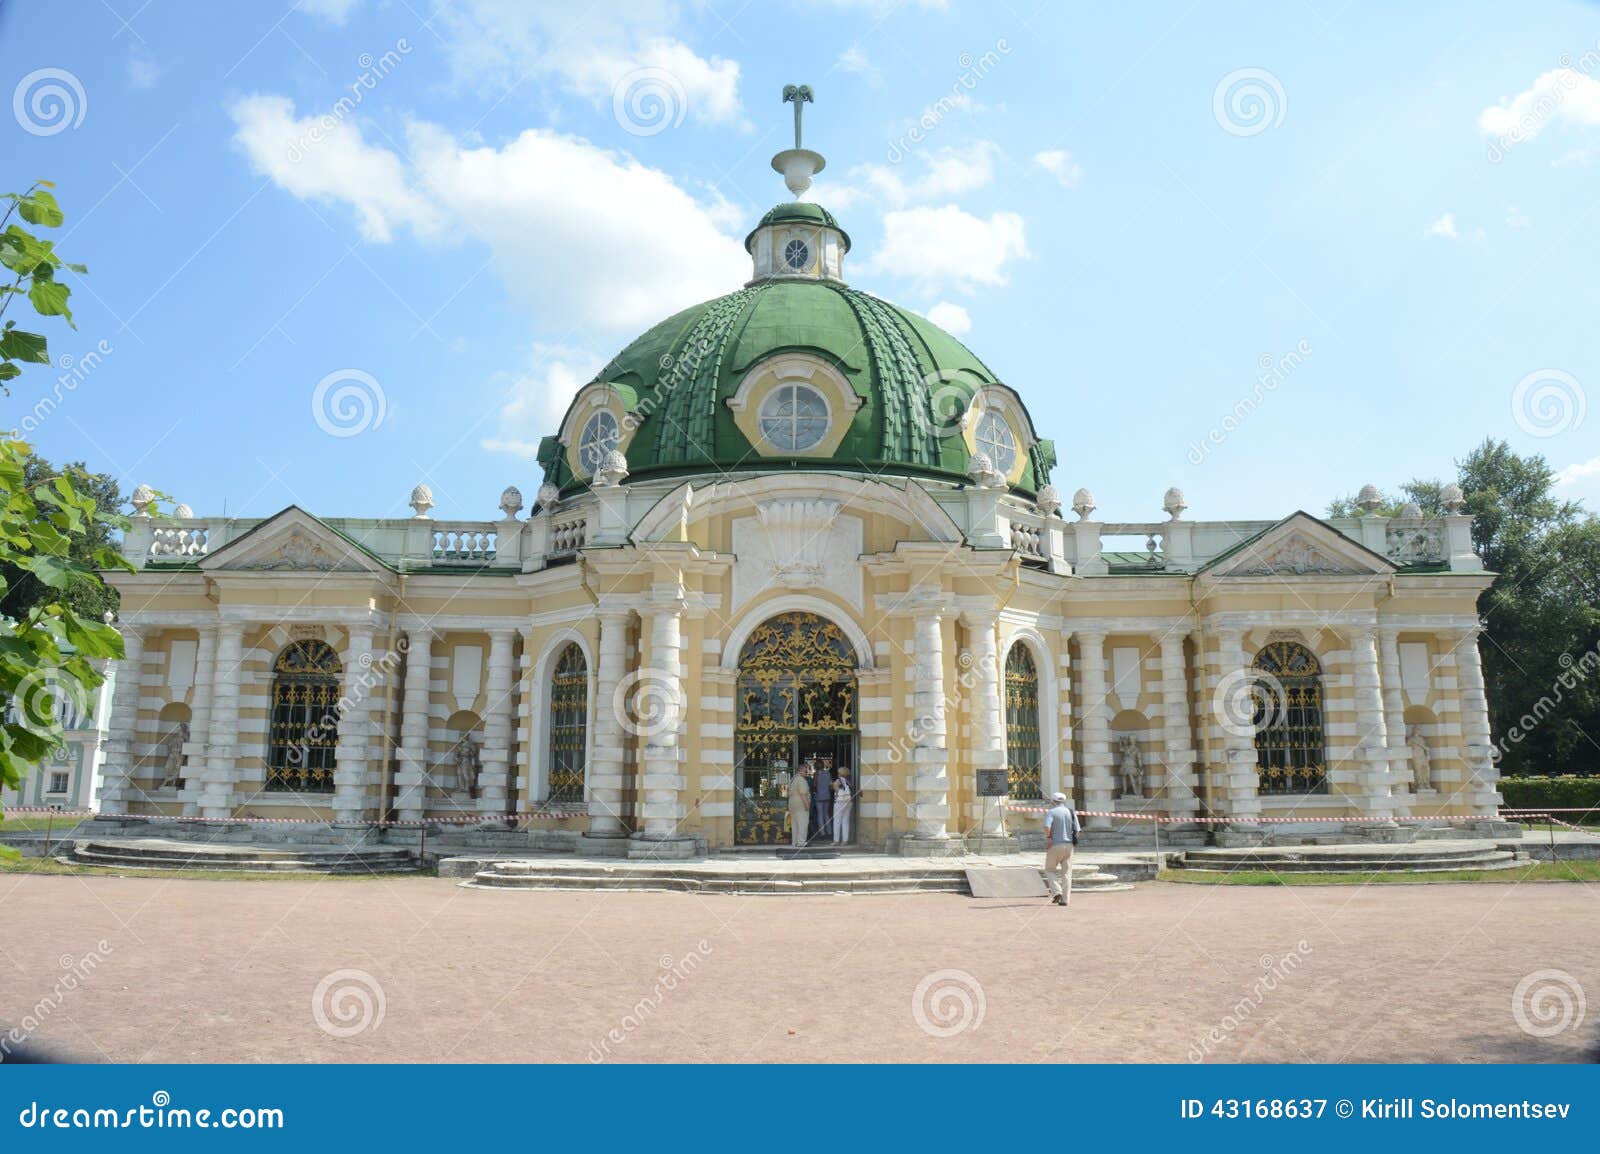 the palace and park ensemble kuskovo graphs sheremetevs xviii-xix centuries grotto 1756-1761 architect argunov moscow heat